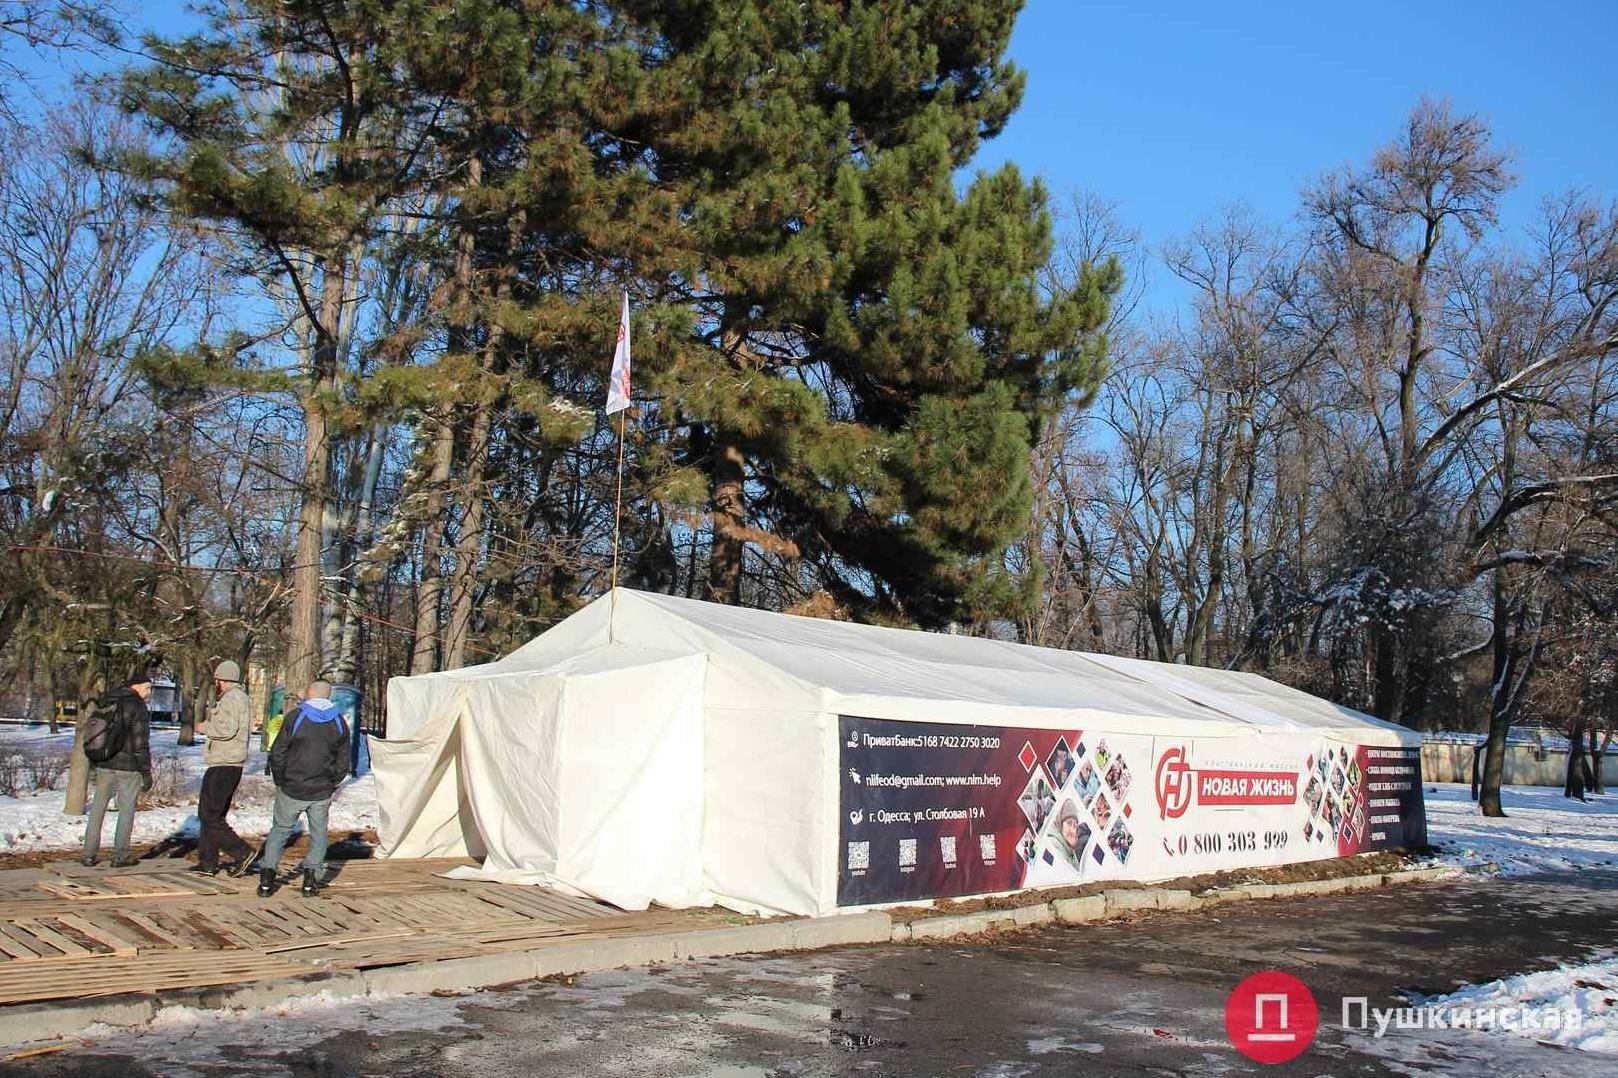 Стаття На Куликовом поле развернули палатку для обогрева: как она работает в условиях карантина. Фото Ранкове місто. Одеса